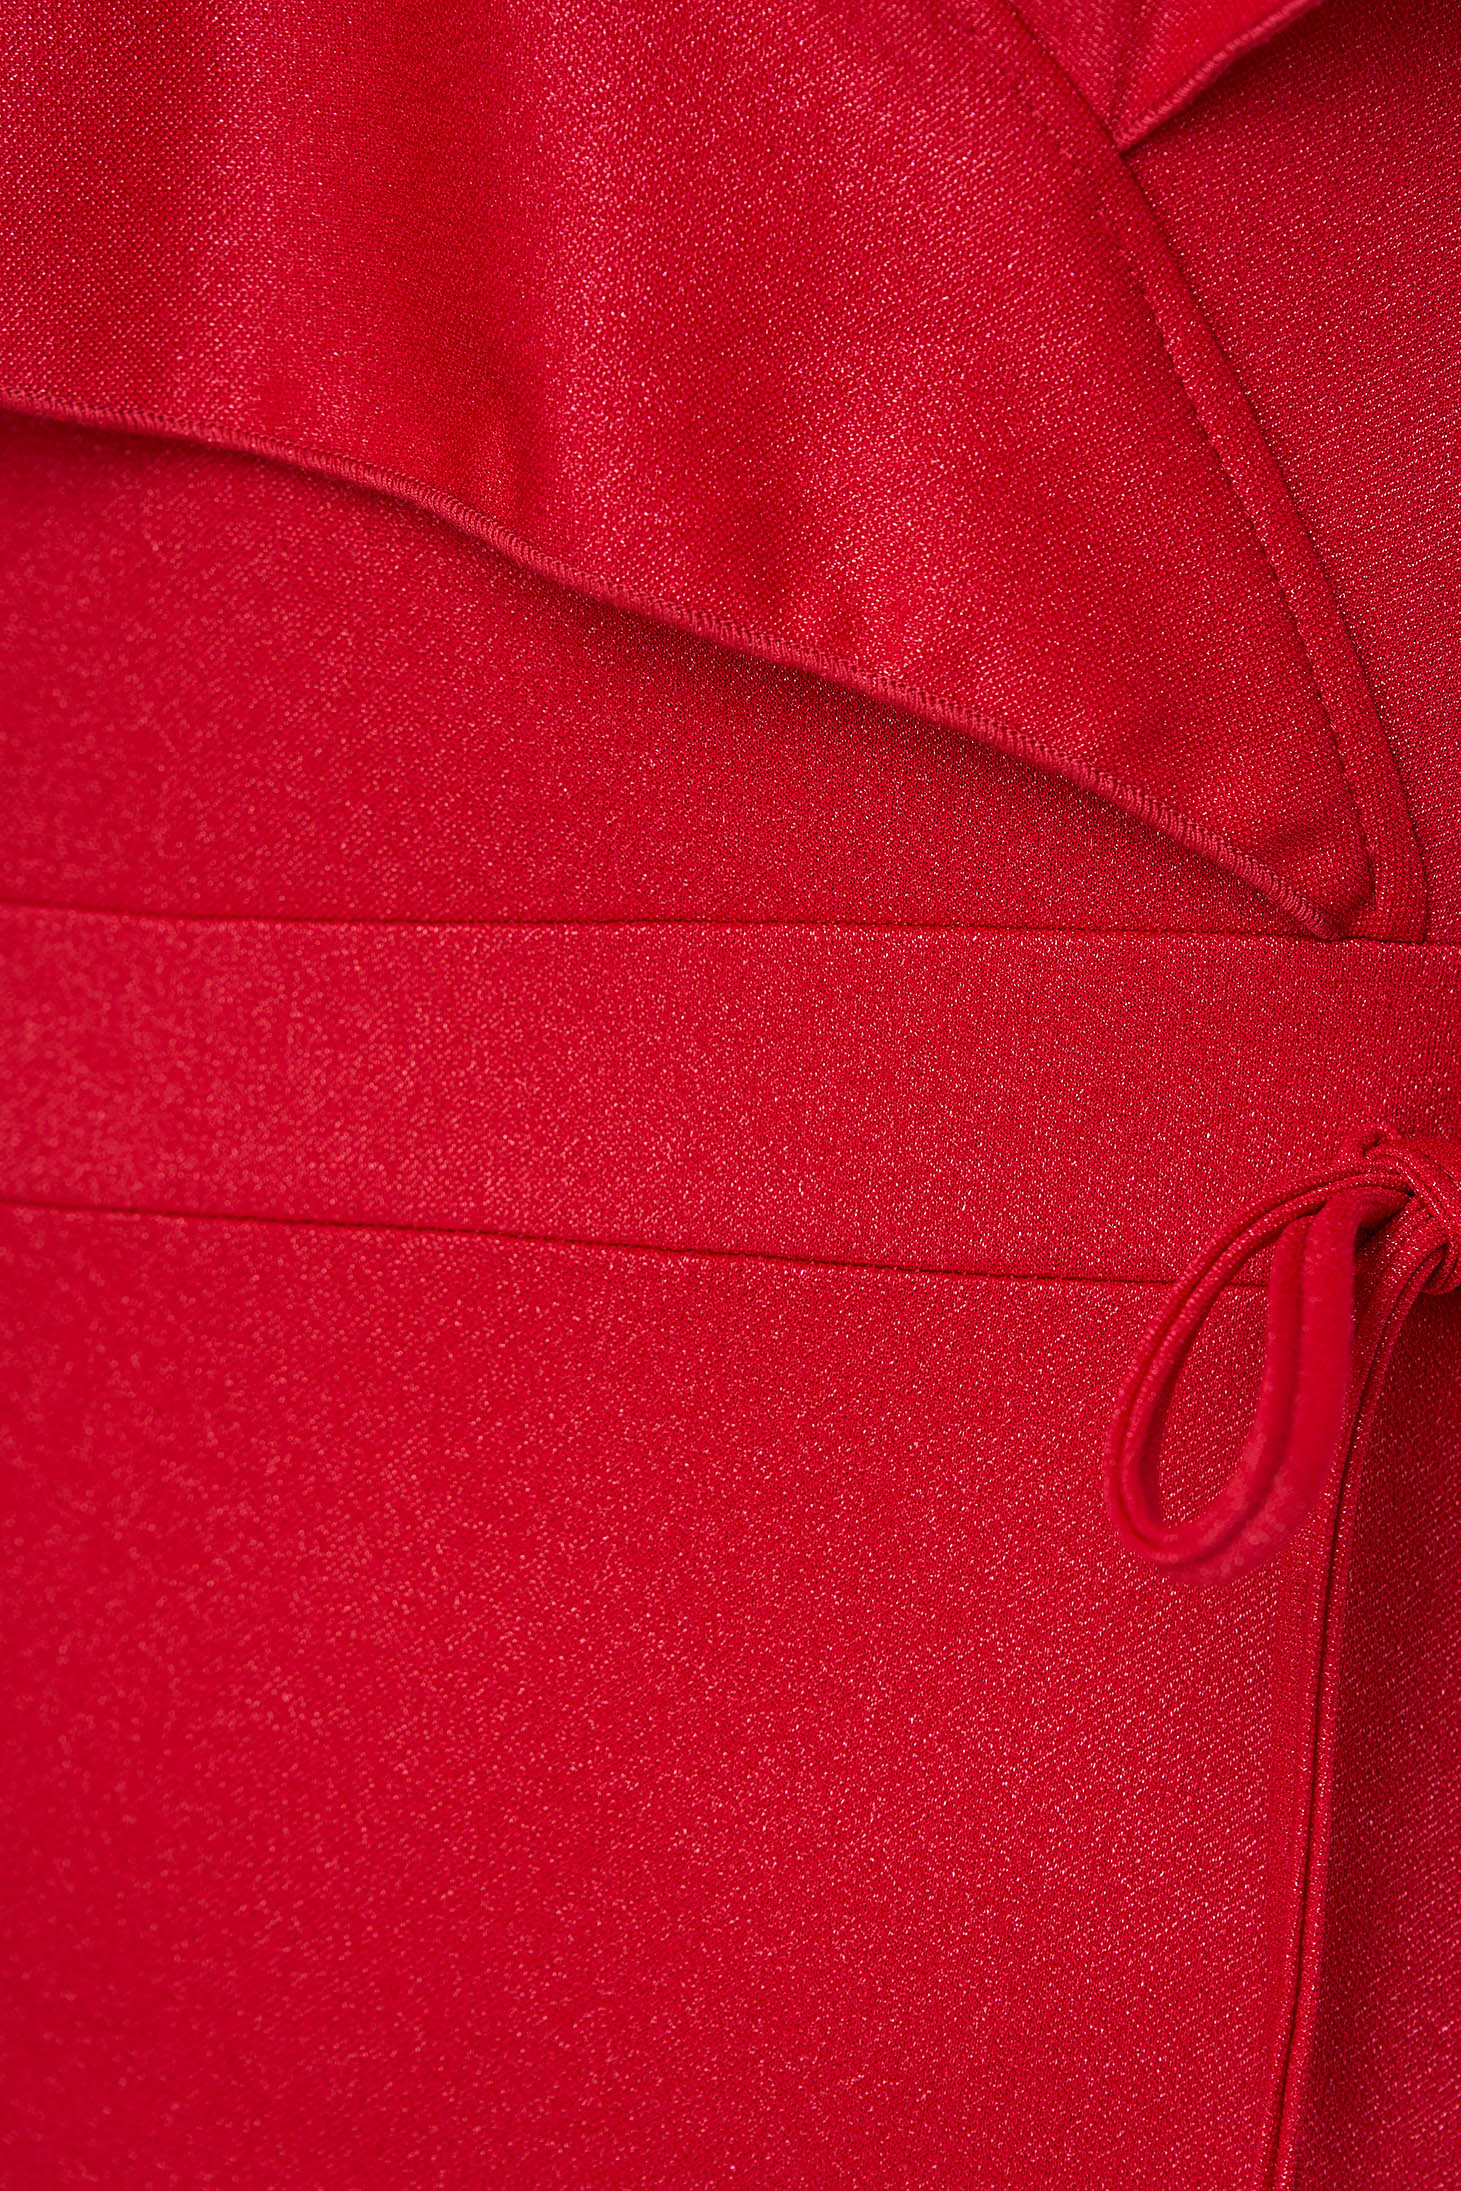 Rochie din crep rosie pana la genunchi tip creion cu aplicatii cu sclipici - StarShinerS 6 - StarShinerS.ro